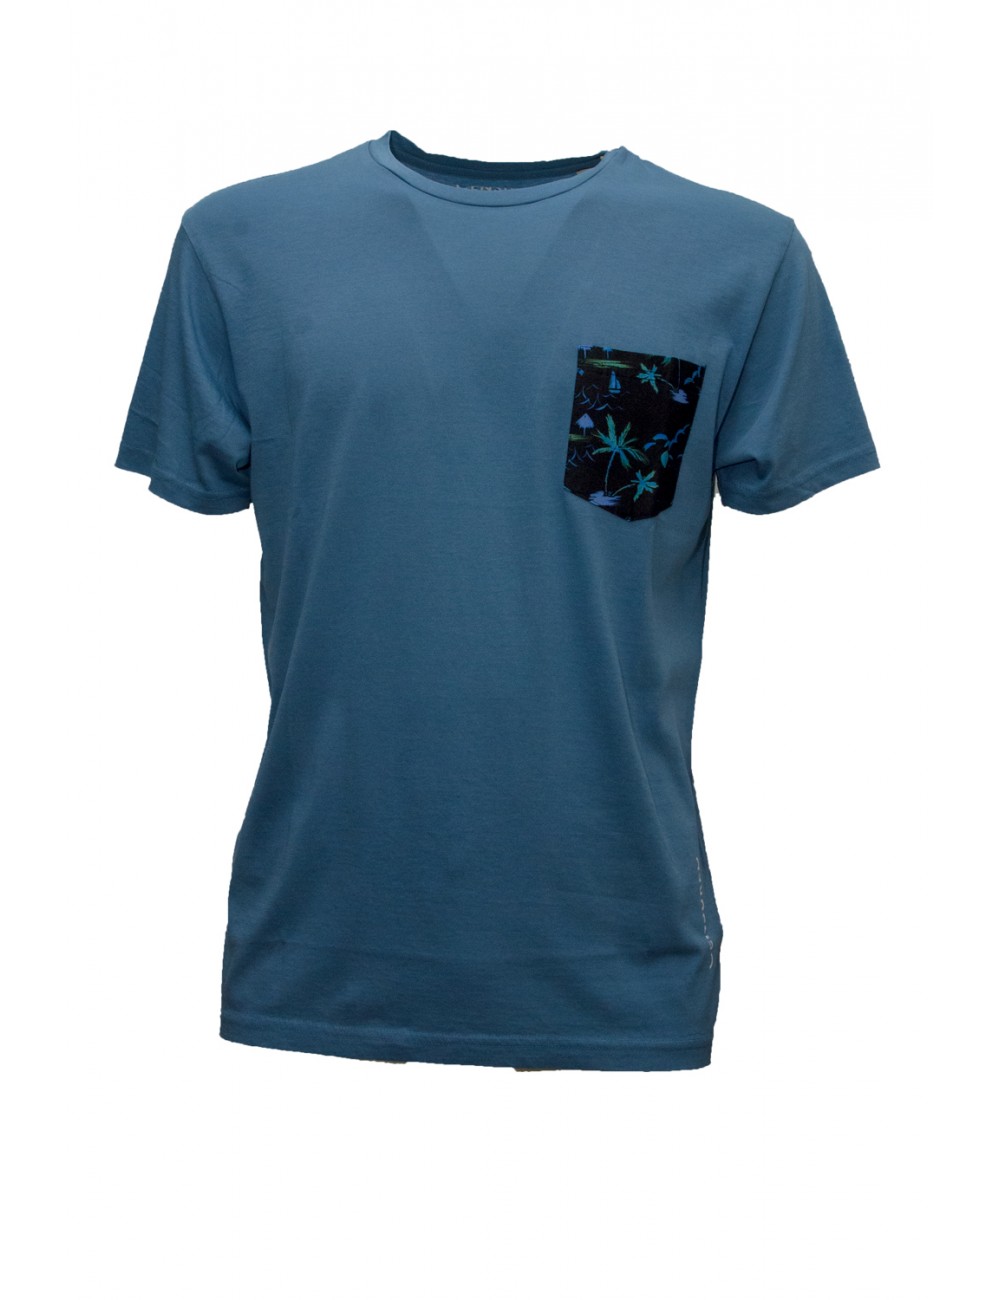 t-shirt censured UOMO BLU AIR BLUE - TM C227 T JSEL 22 vista frontale